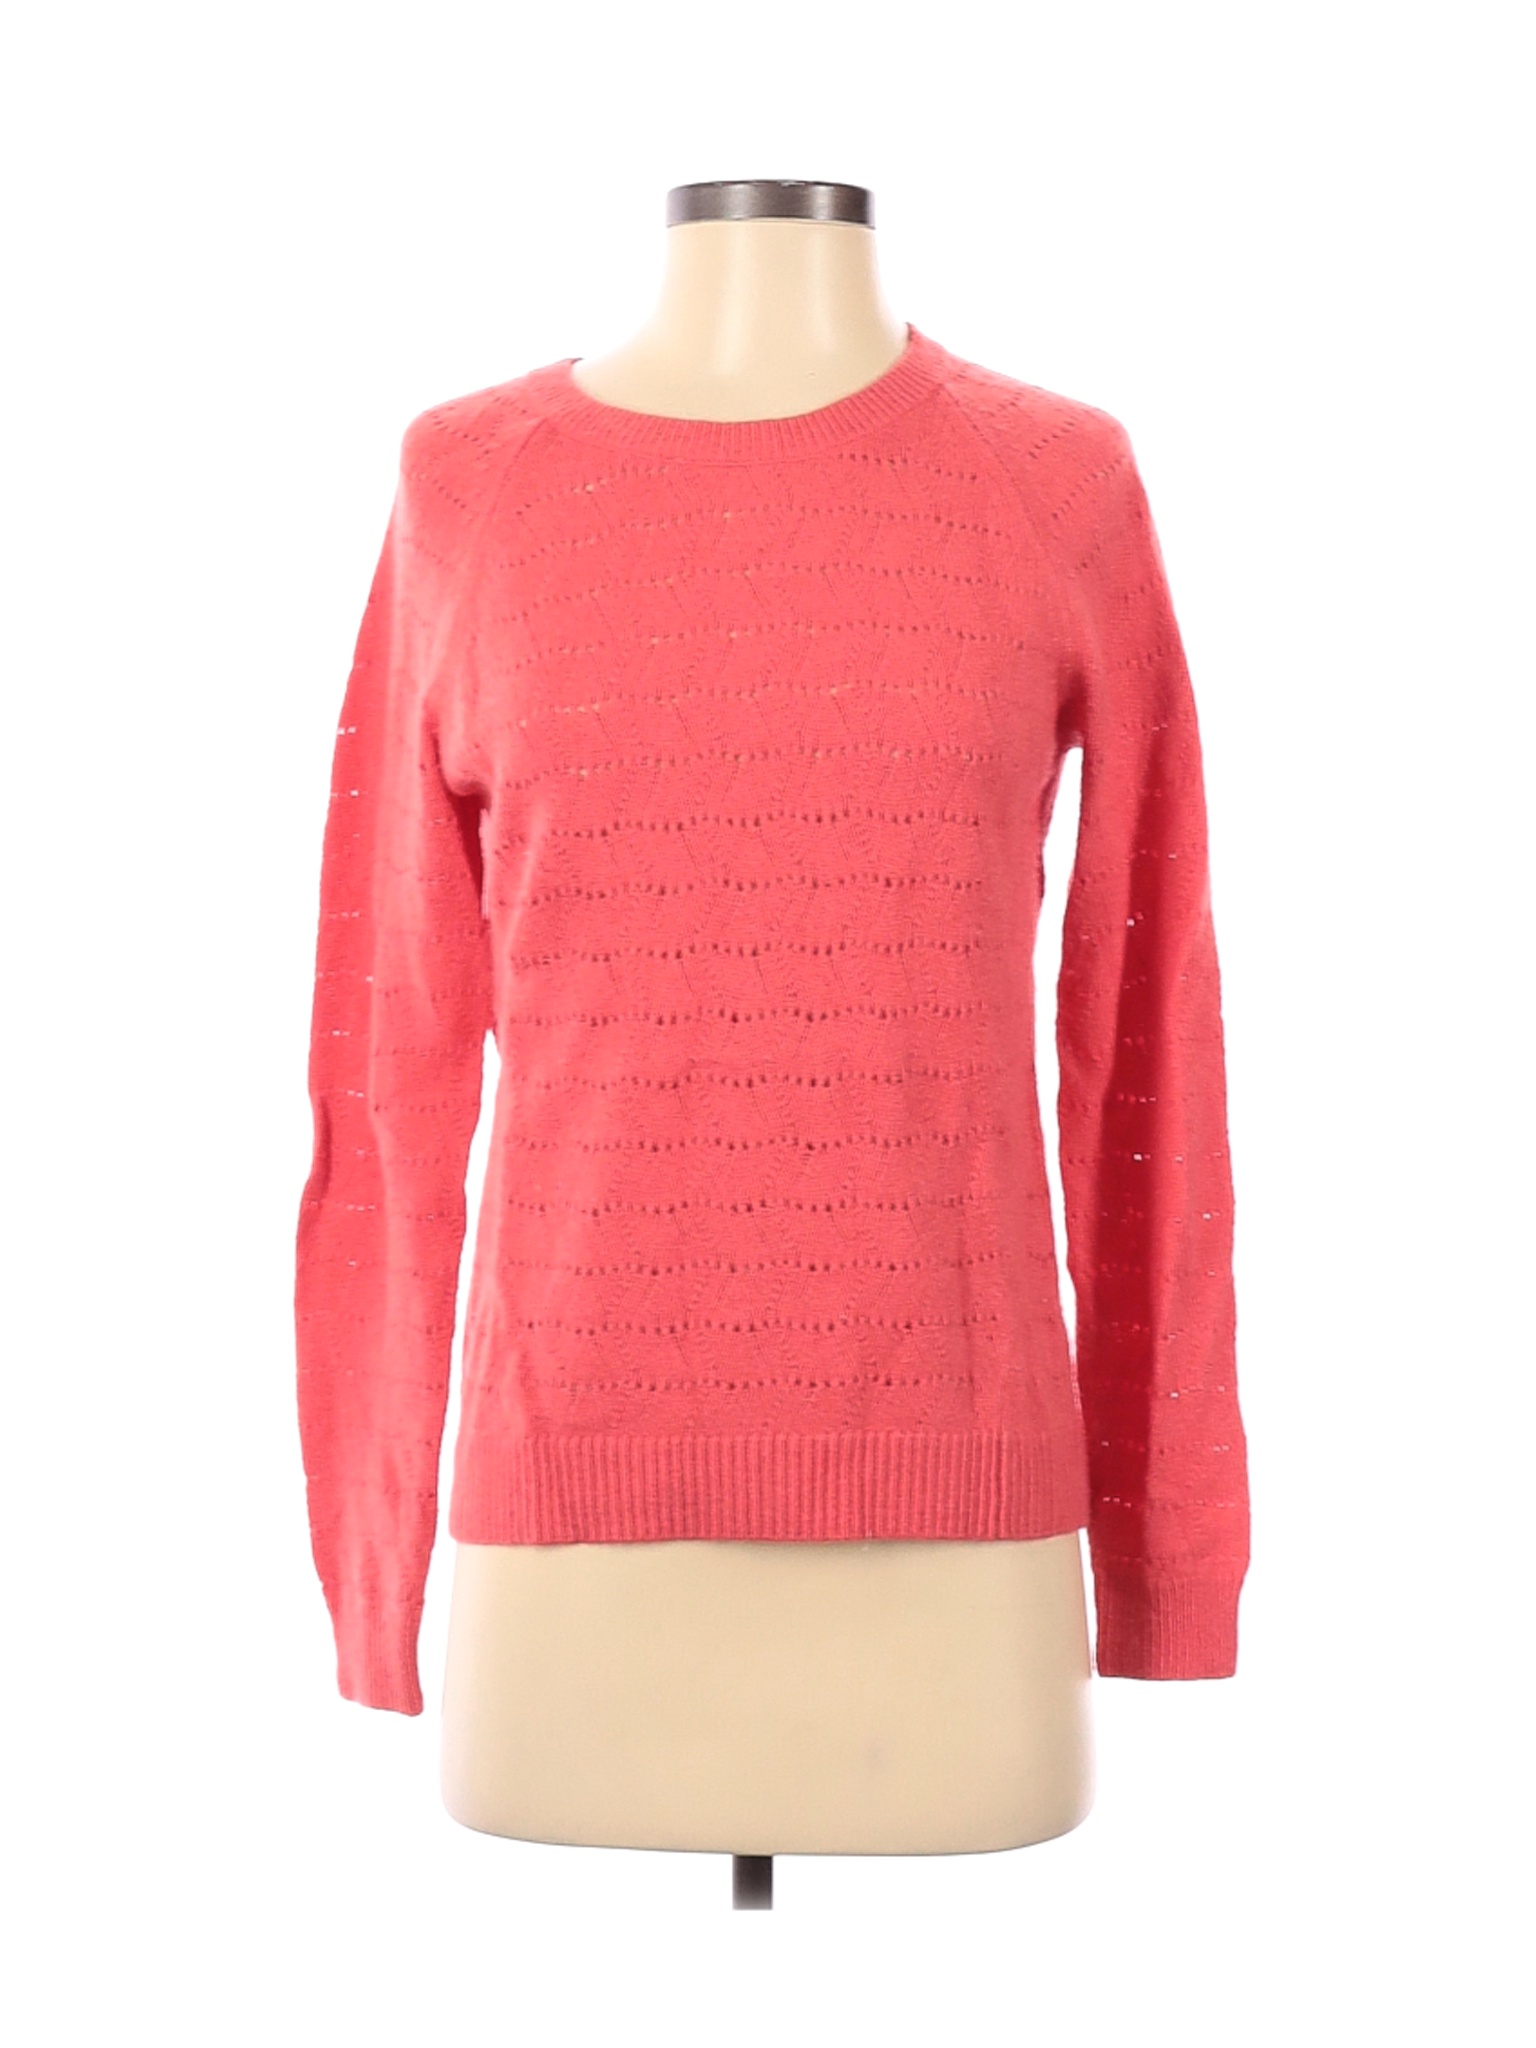 Ann Taylor LOFT Women Pink Pullover Sweater S | eBay